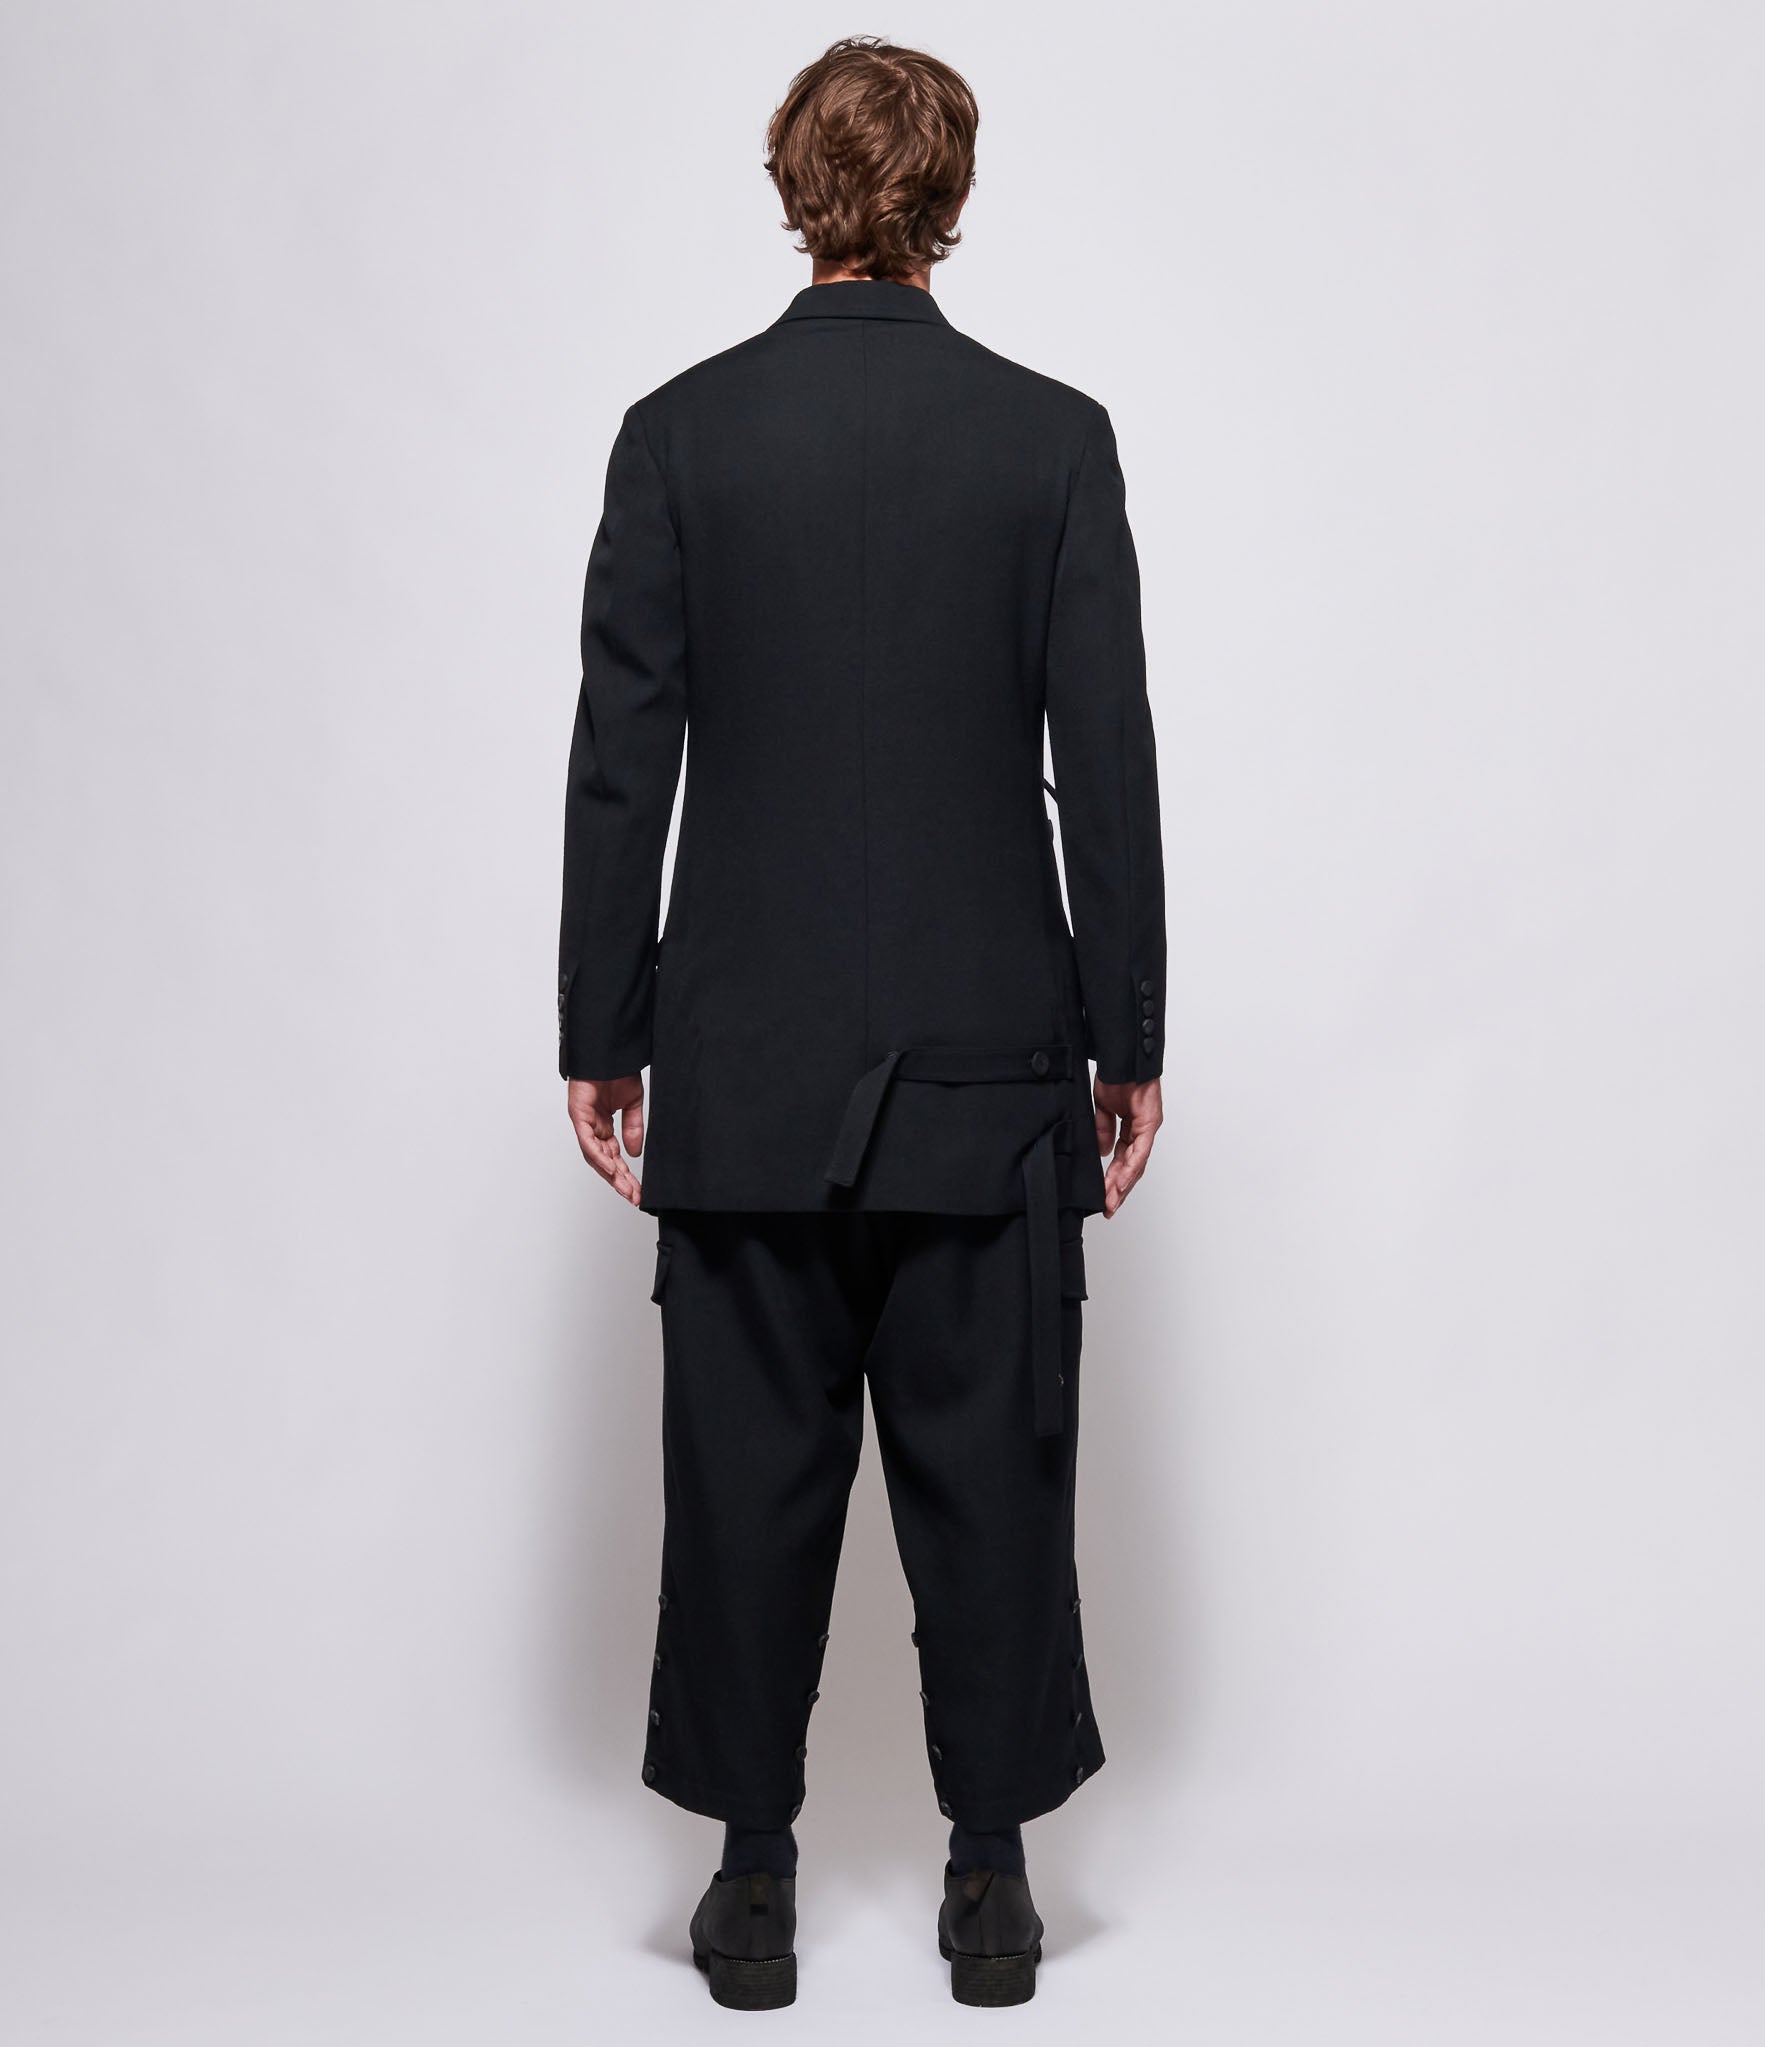 Yohji Yamamoto Pour Homme W-Belted Peaked Jacket